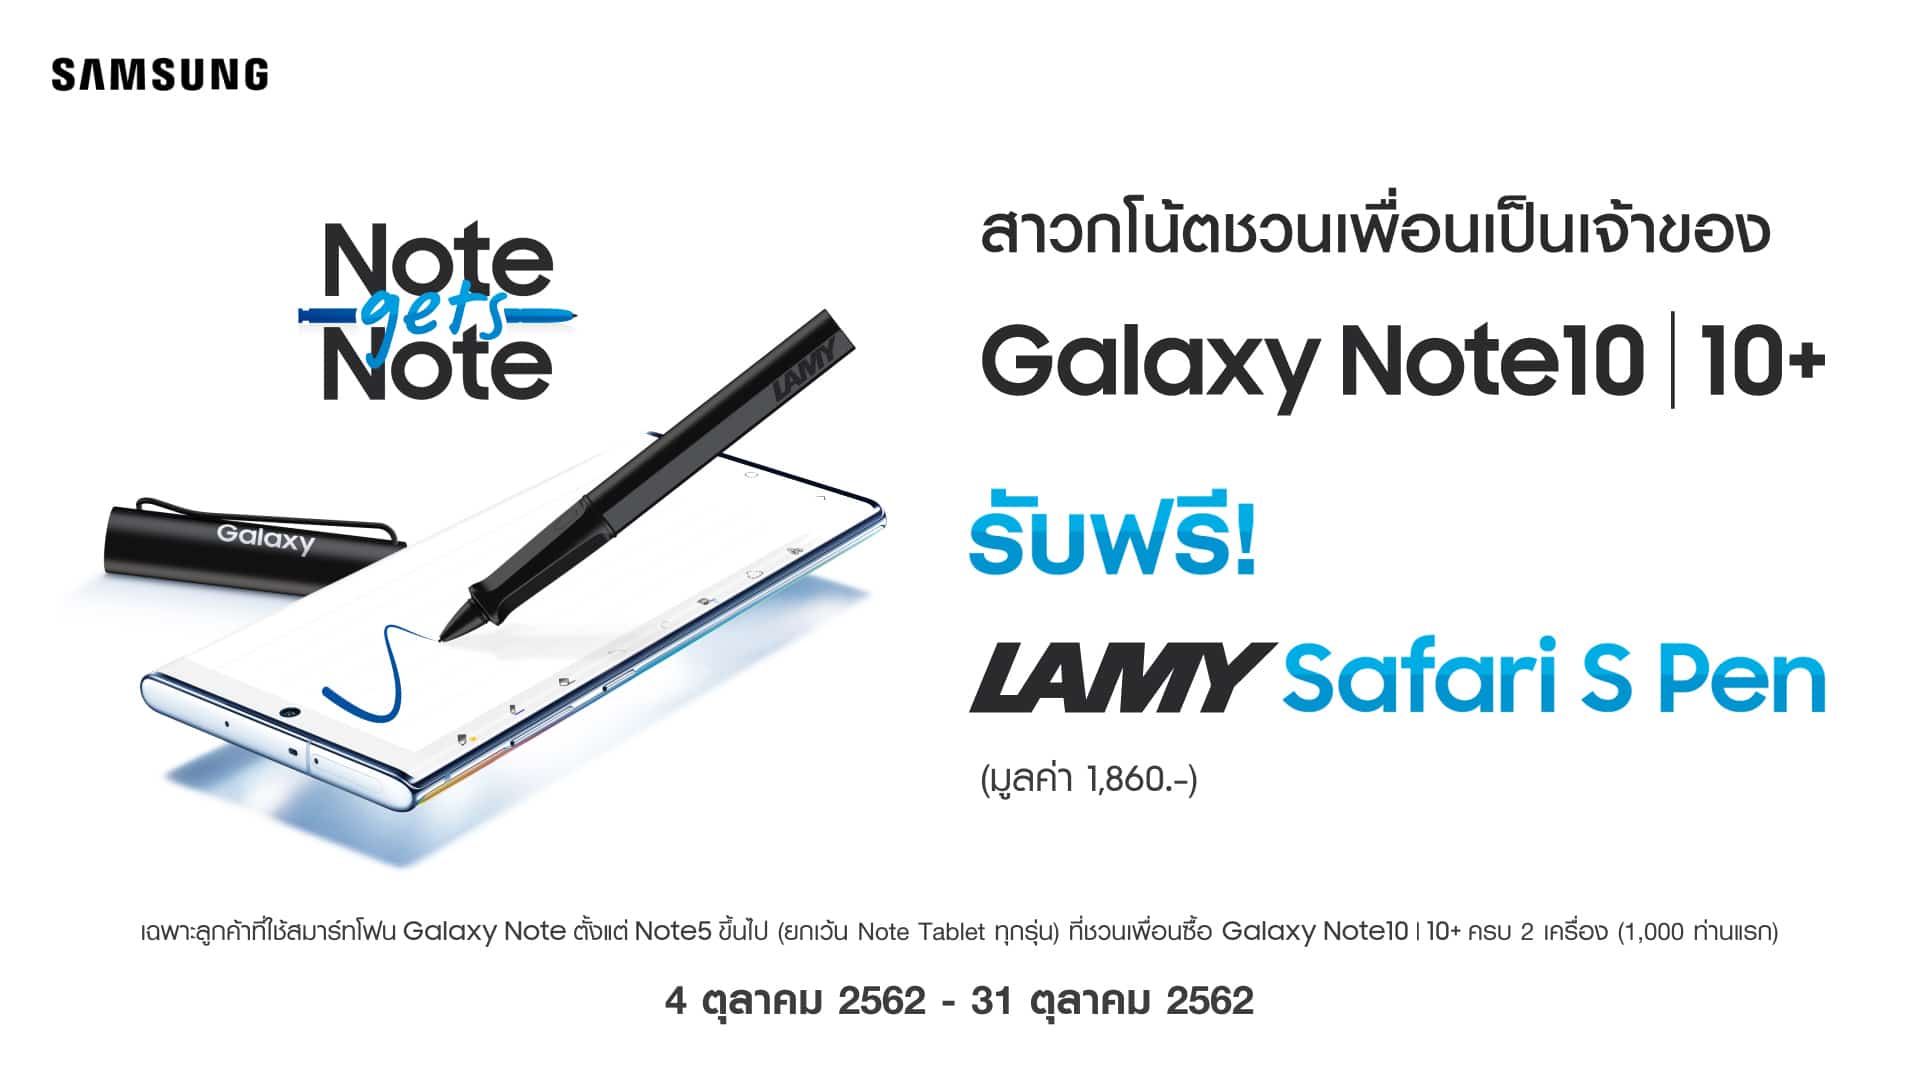 Samsung ส่งแคมเปญ “Note gets Note” ชวนเพื่อนมาใช้ Note 10 Series รับฟรี ปากกา LAMY 1